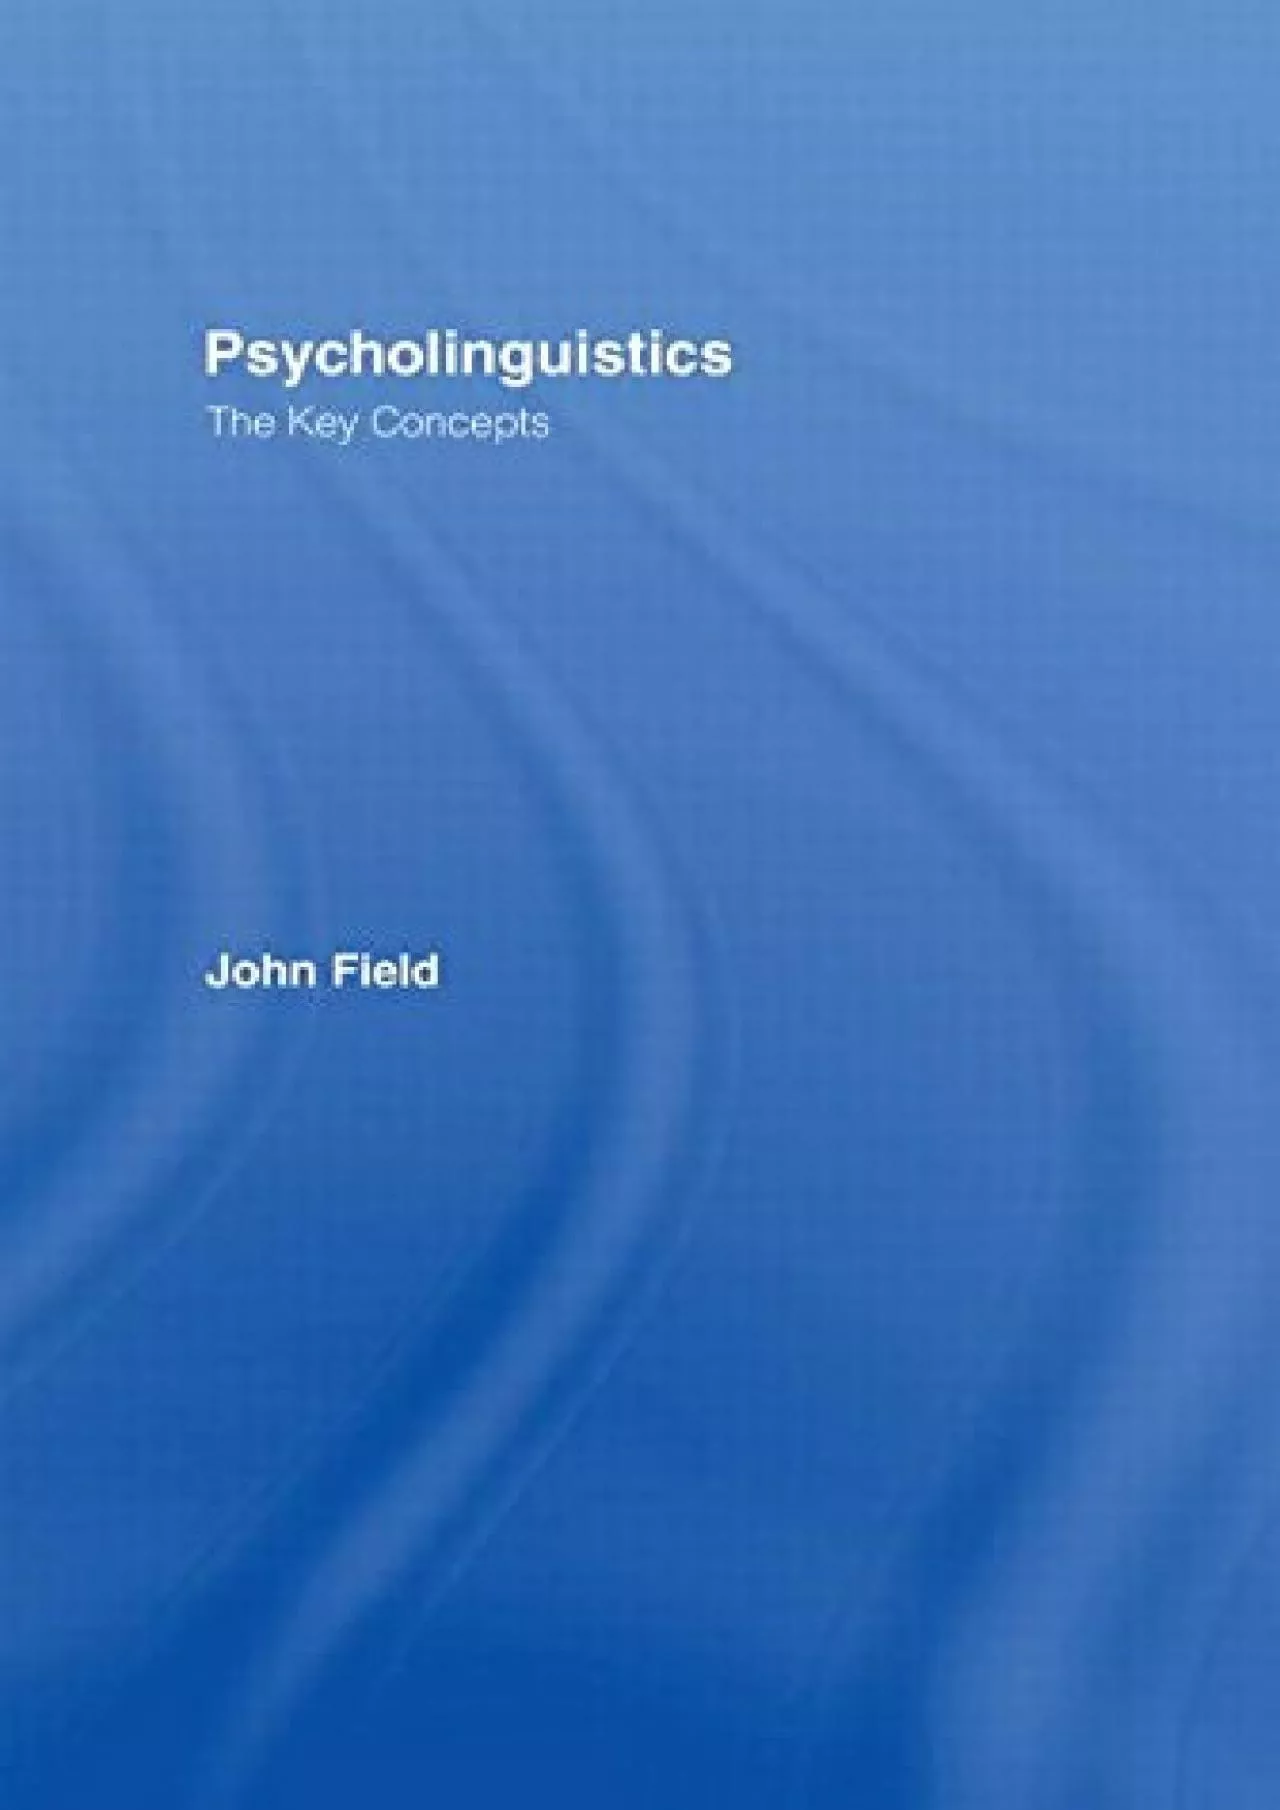 (DOWNLOAD)-Psycholinguistics: The Key Concepts (Routledge Key Guides)